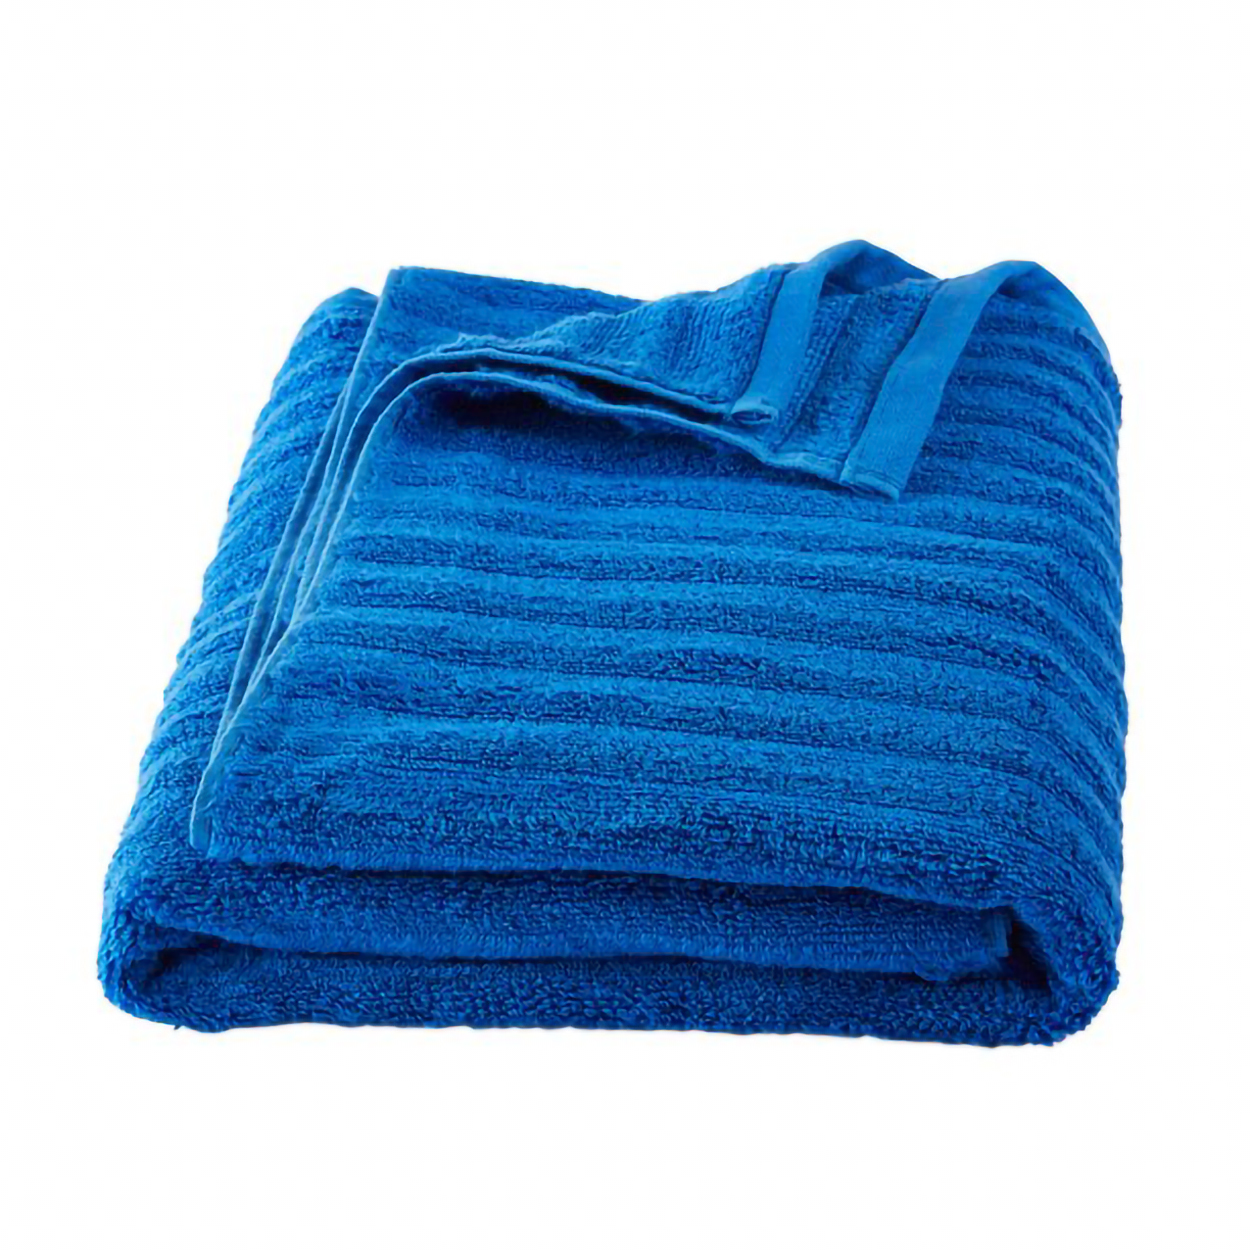 Mainstays Performance Textured 6-Piece Bath Towel Set - Cobalt Crush - image 2 of 5